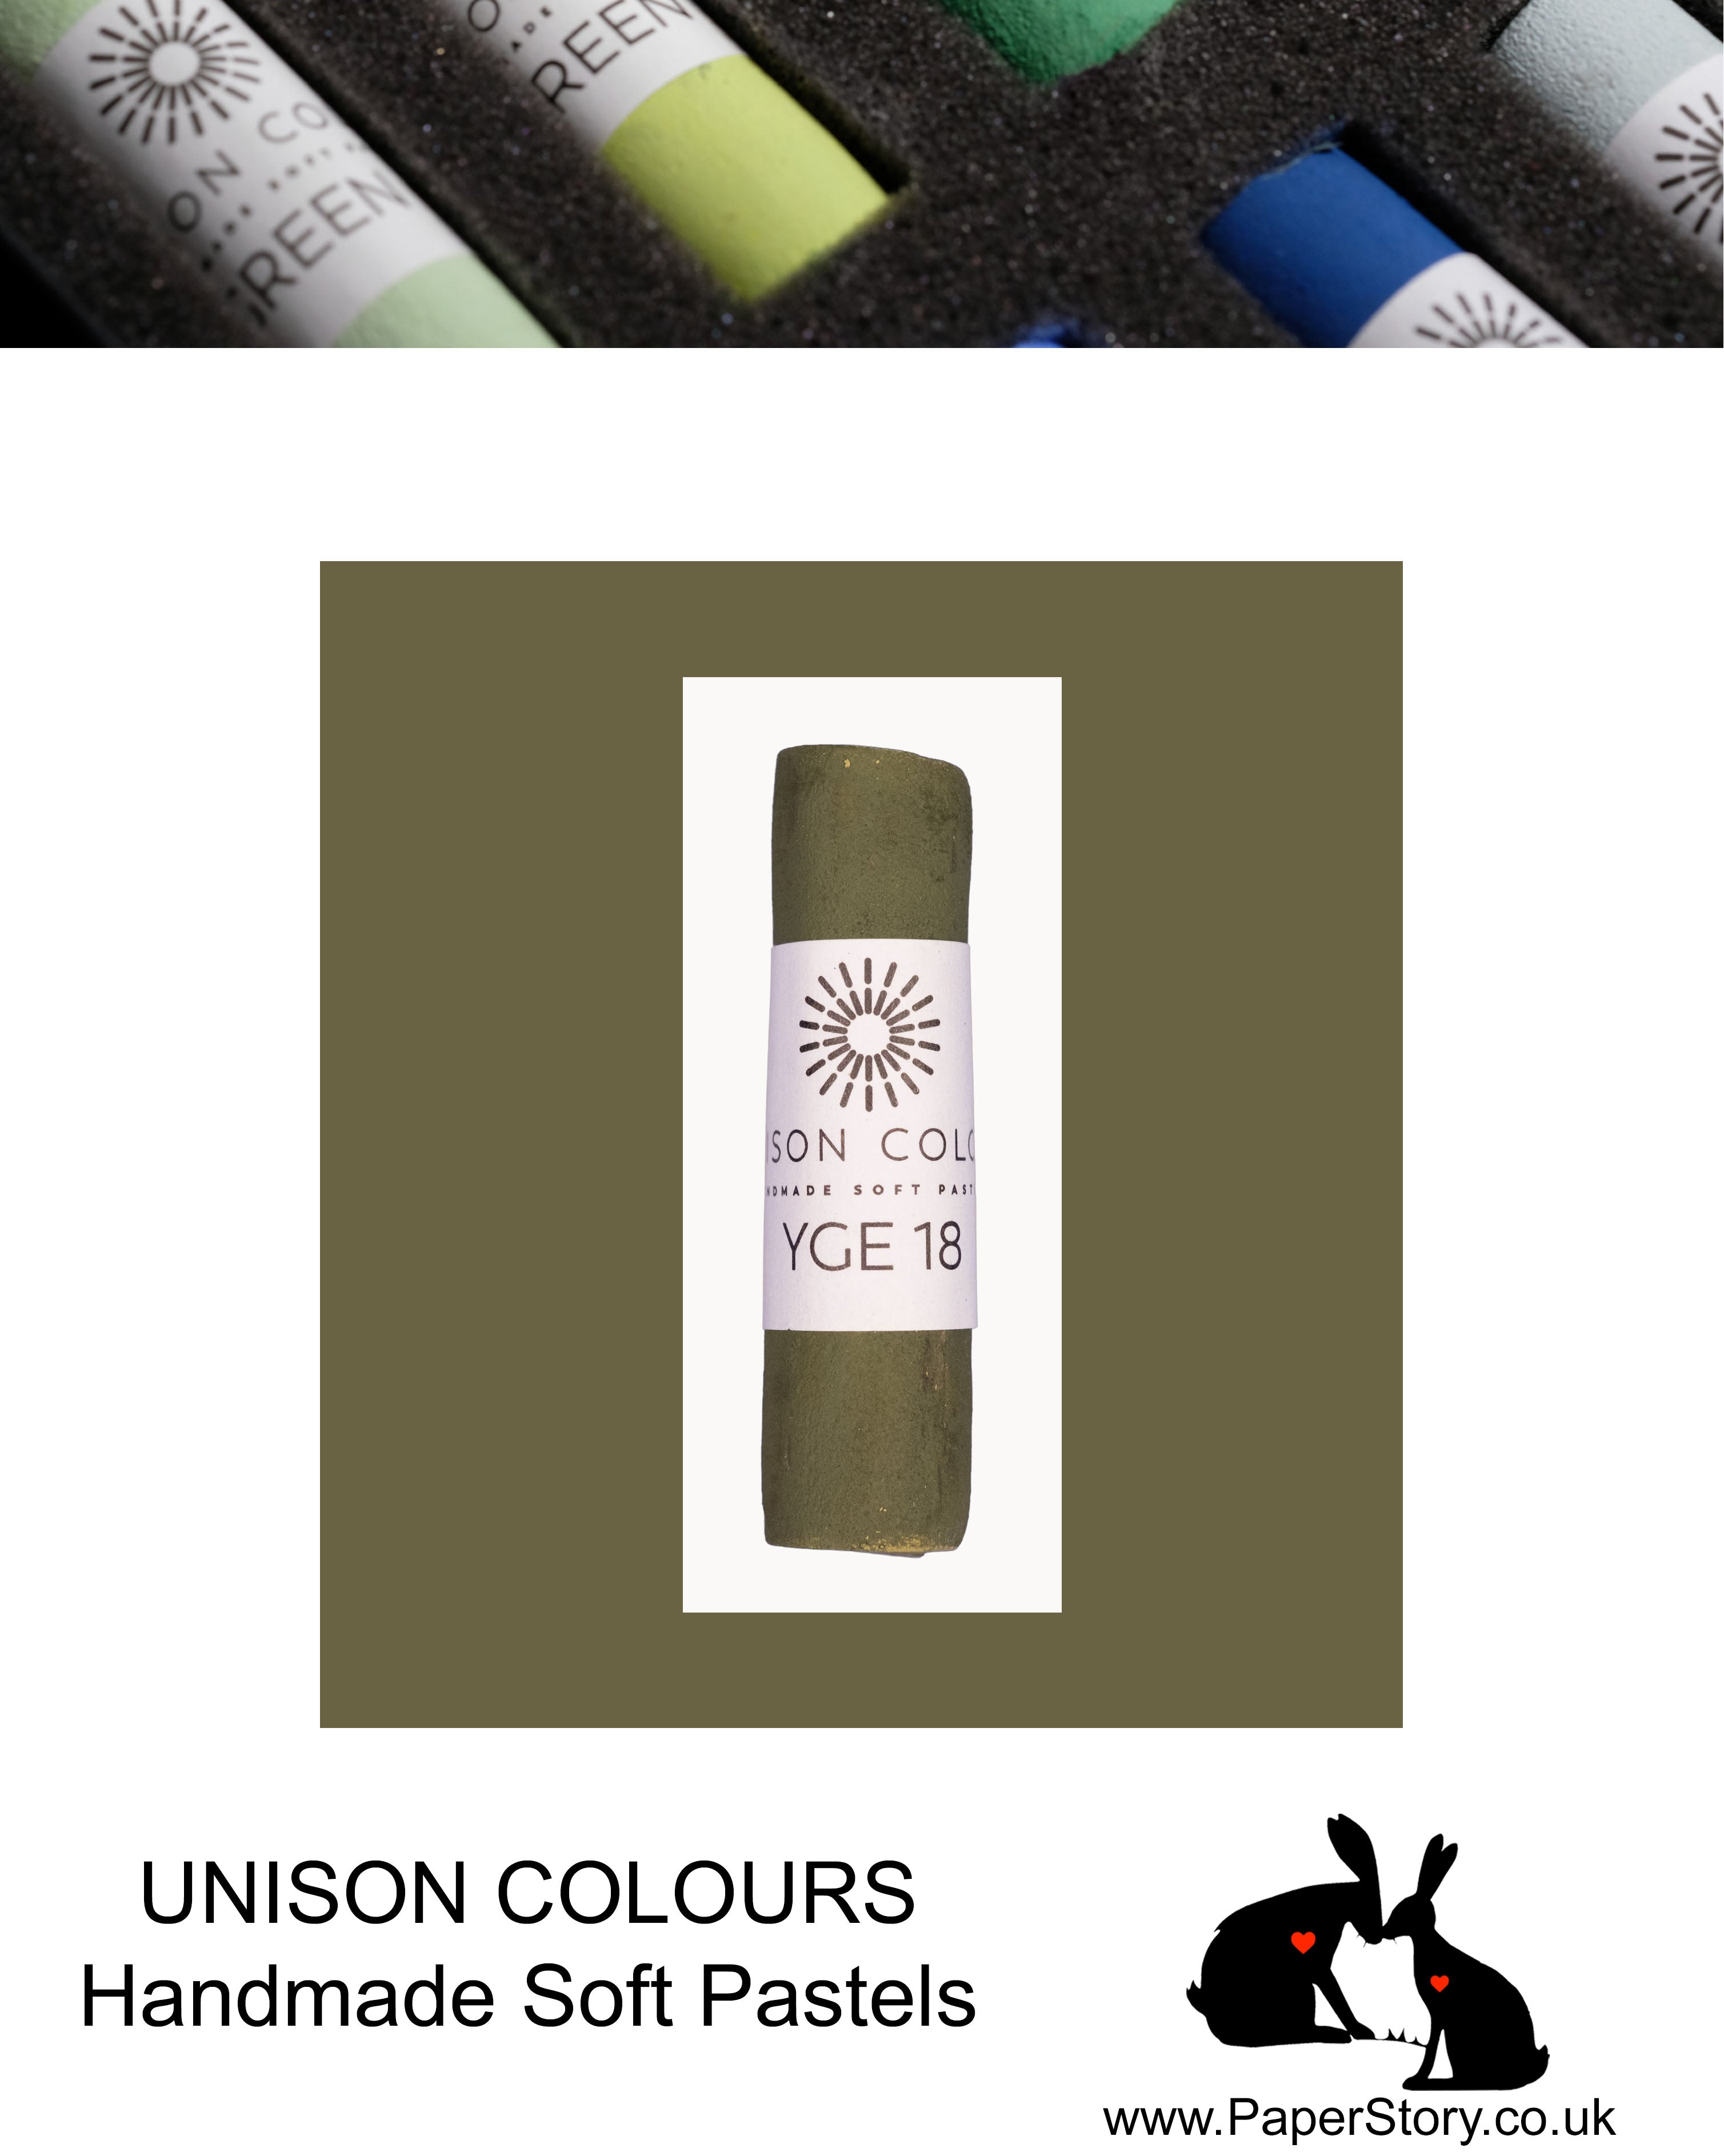 Unison Colour Handmade Soft Pastels Yellow Green Earth 18 - Size Regular